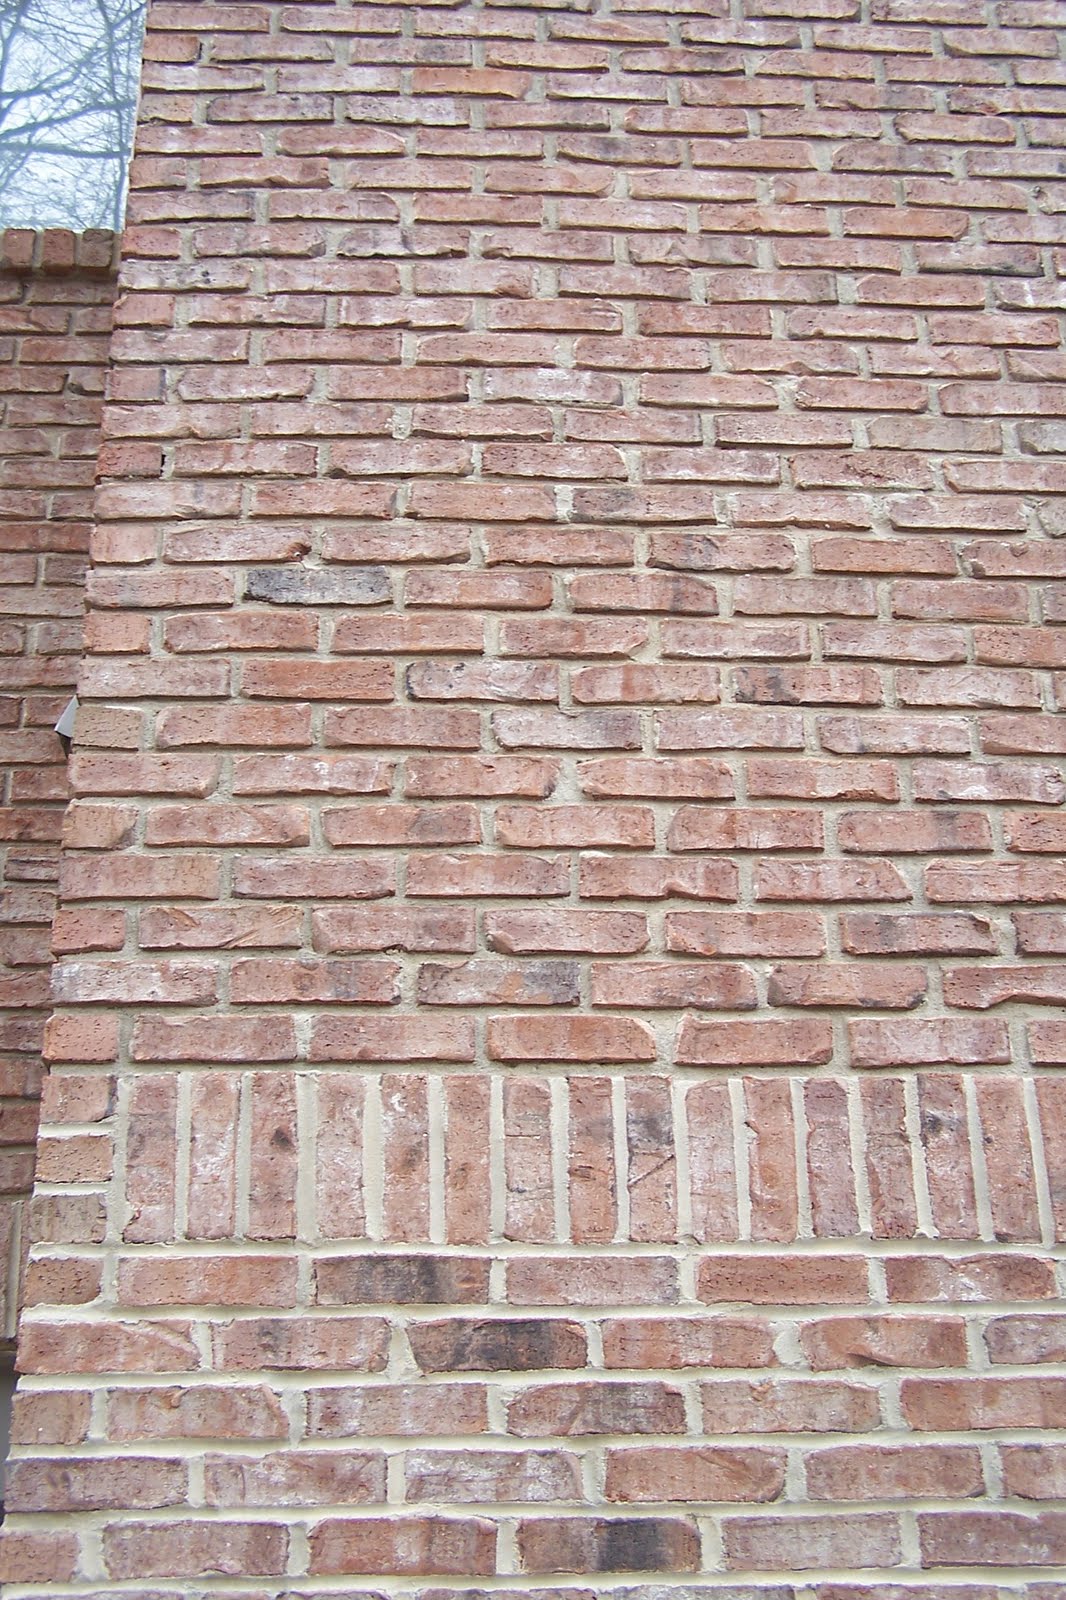 How To Make New Brick & Mortar Look Old - Robert Smith's blog